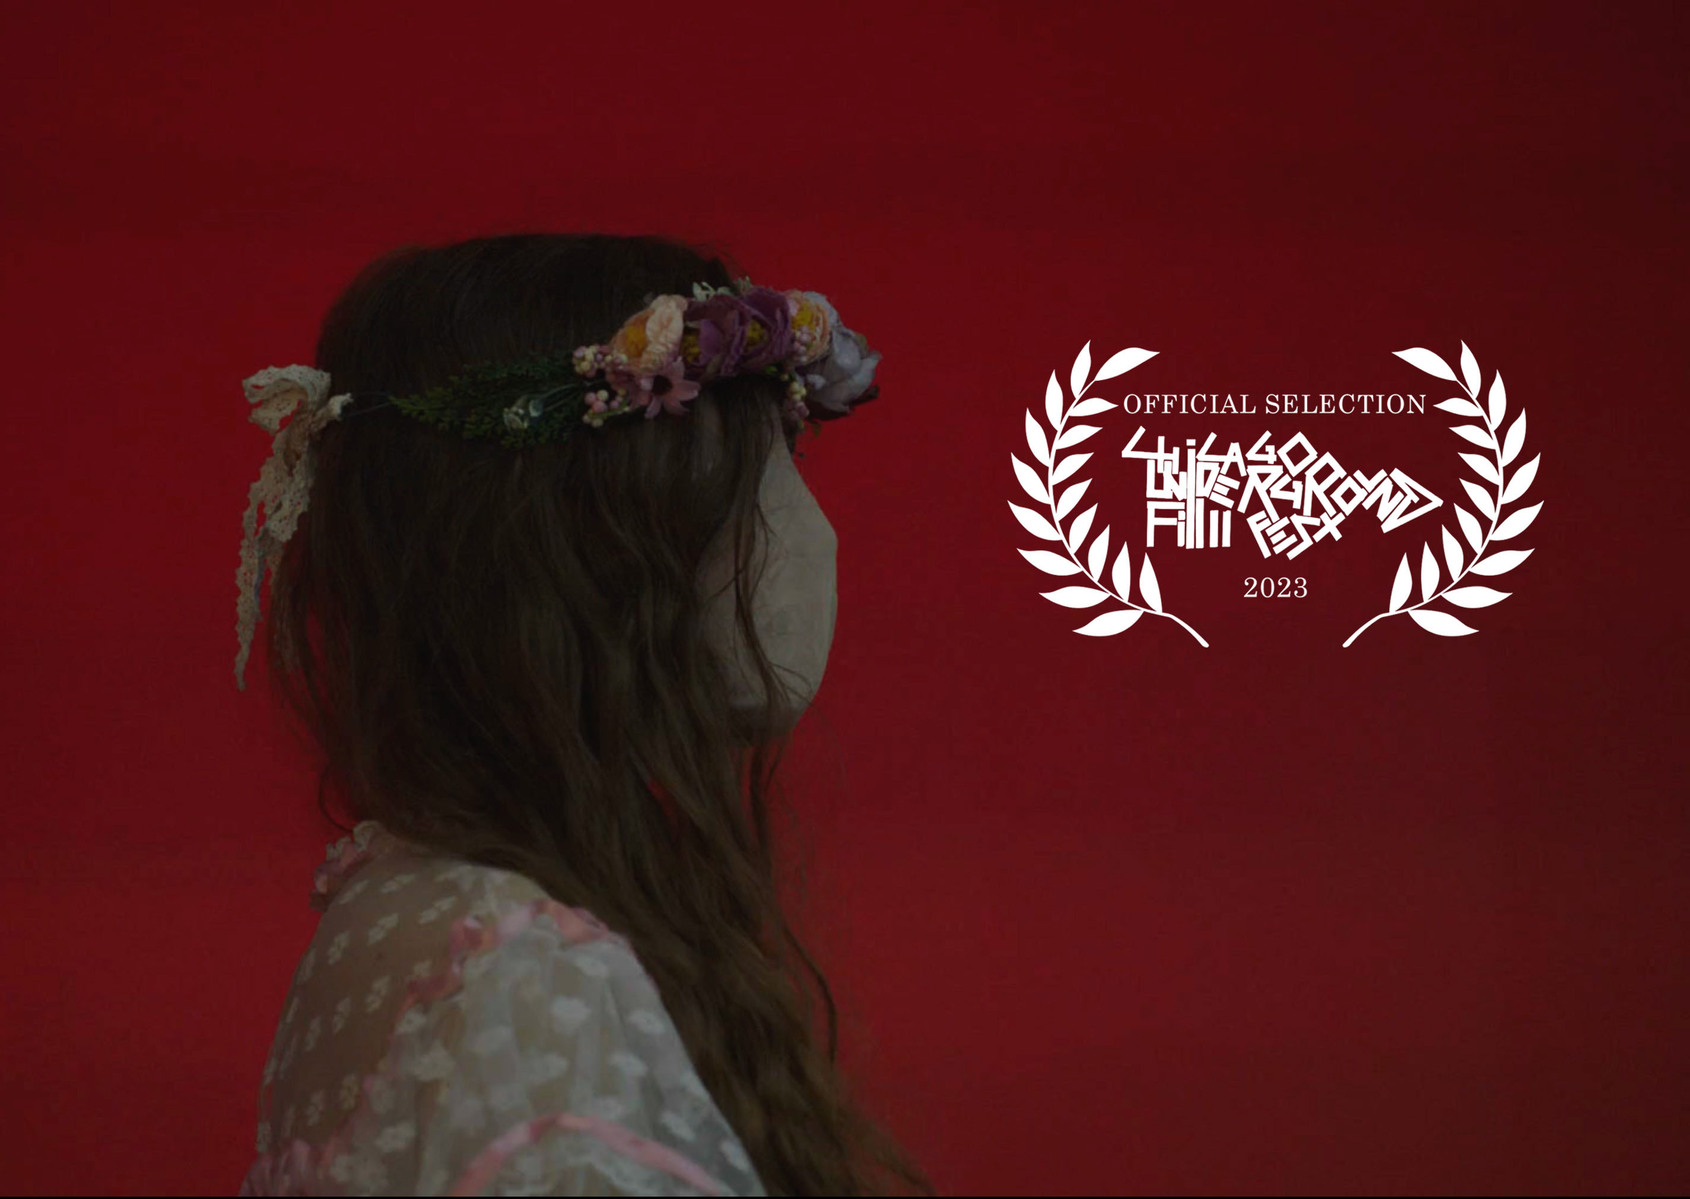 Strange masked girl against red wall background with Chicago Underground Film Festival laurels.